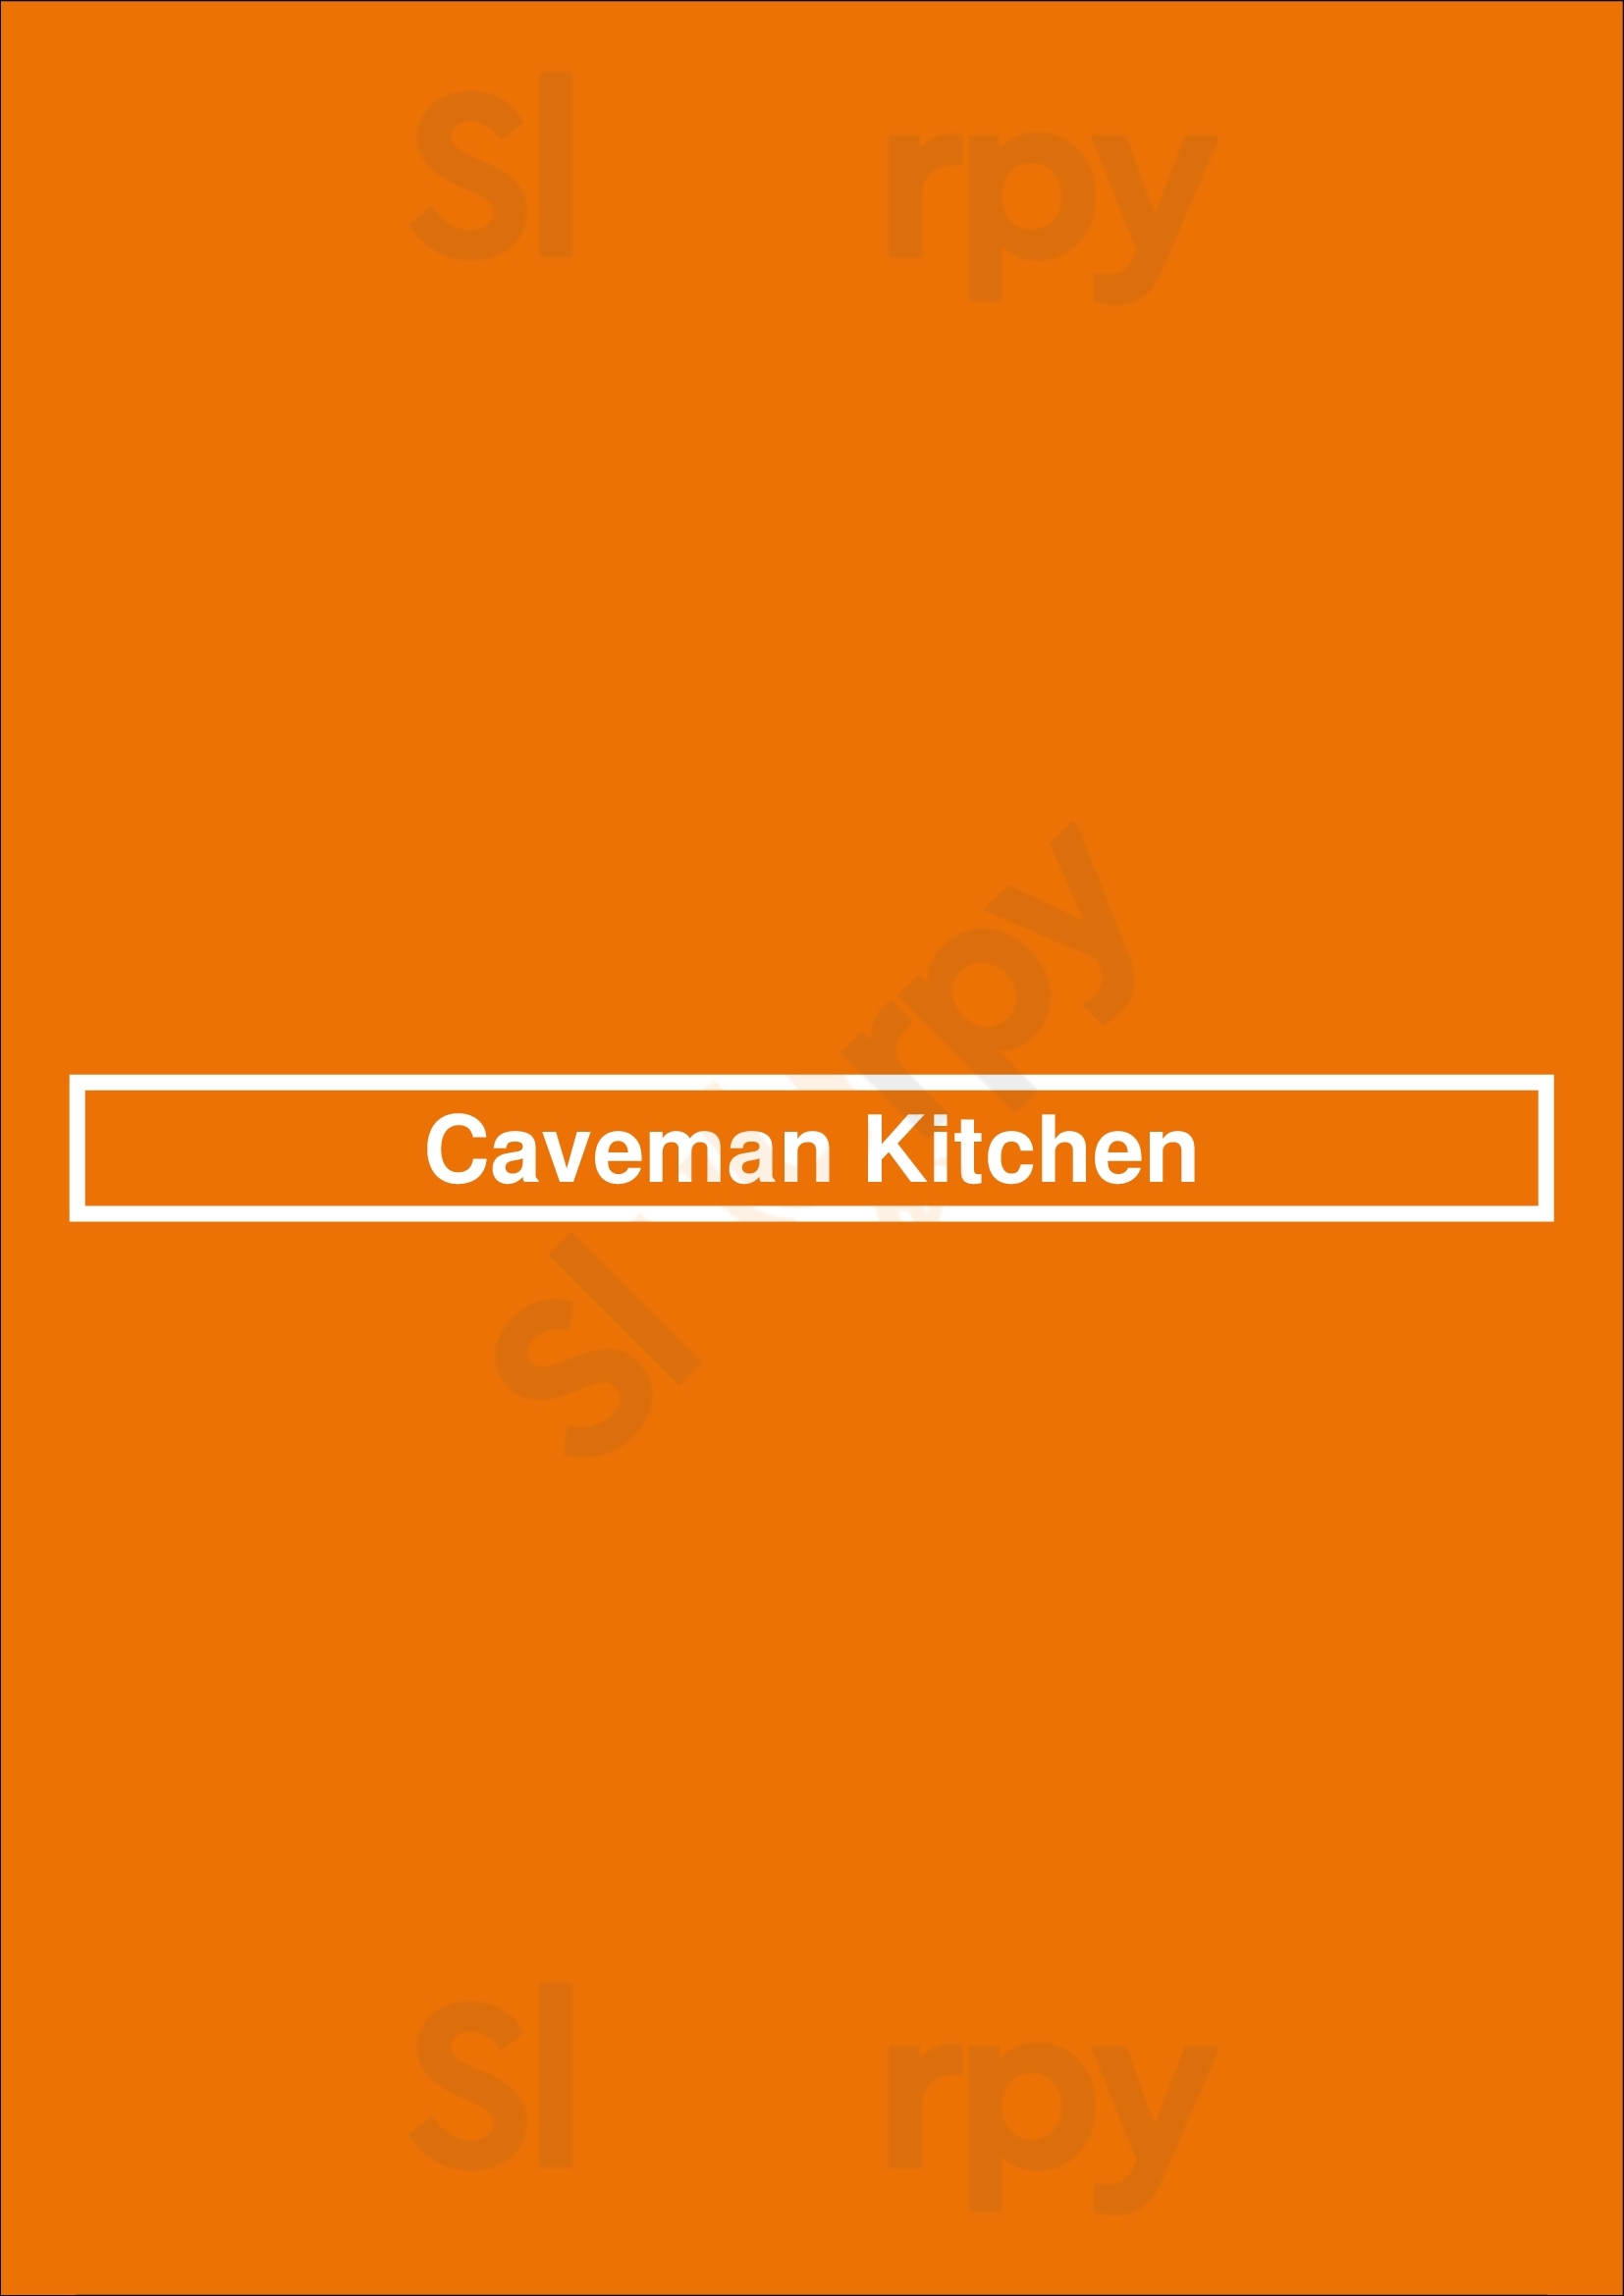 Caveman Kitchen Los Angeles Menu - 1